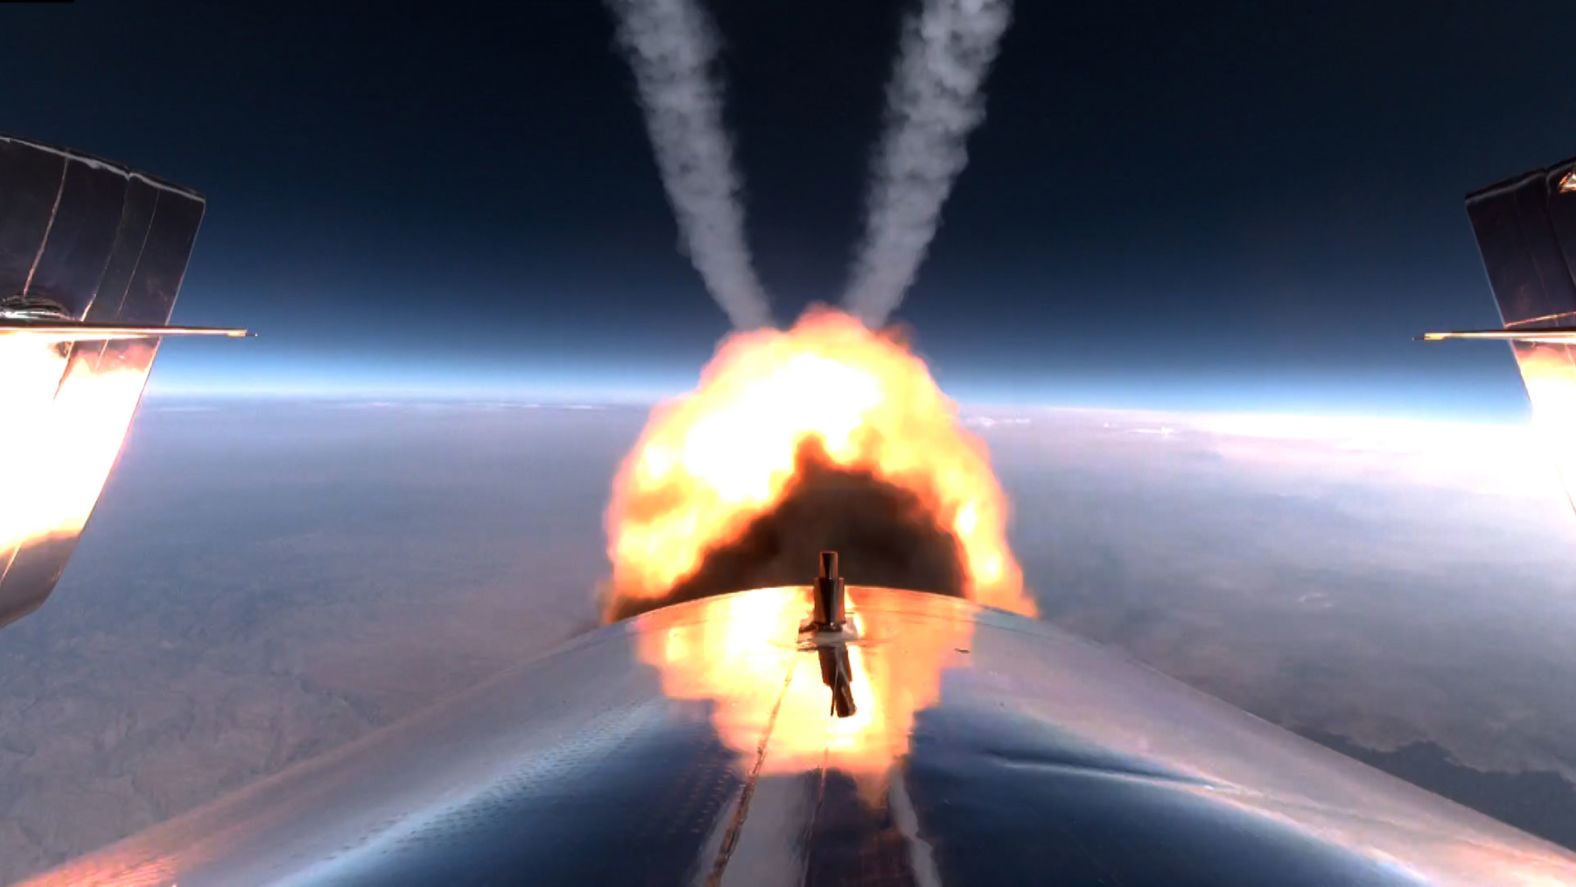 The VSS Unity's rocket burns during the flight.